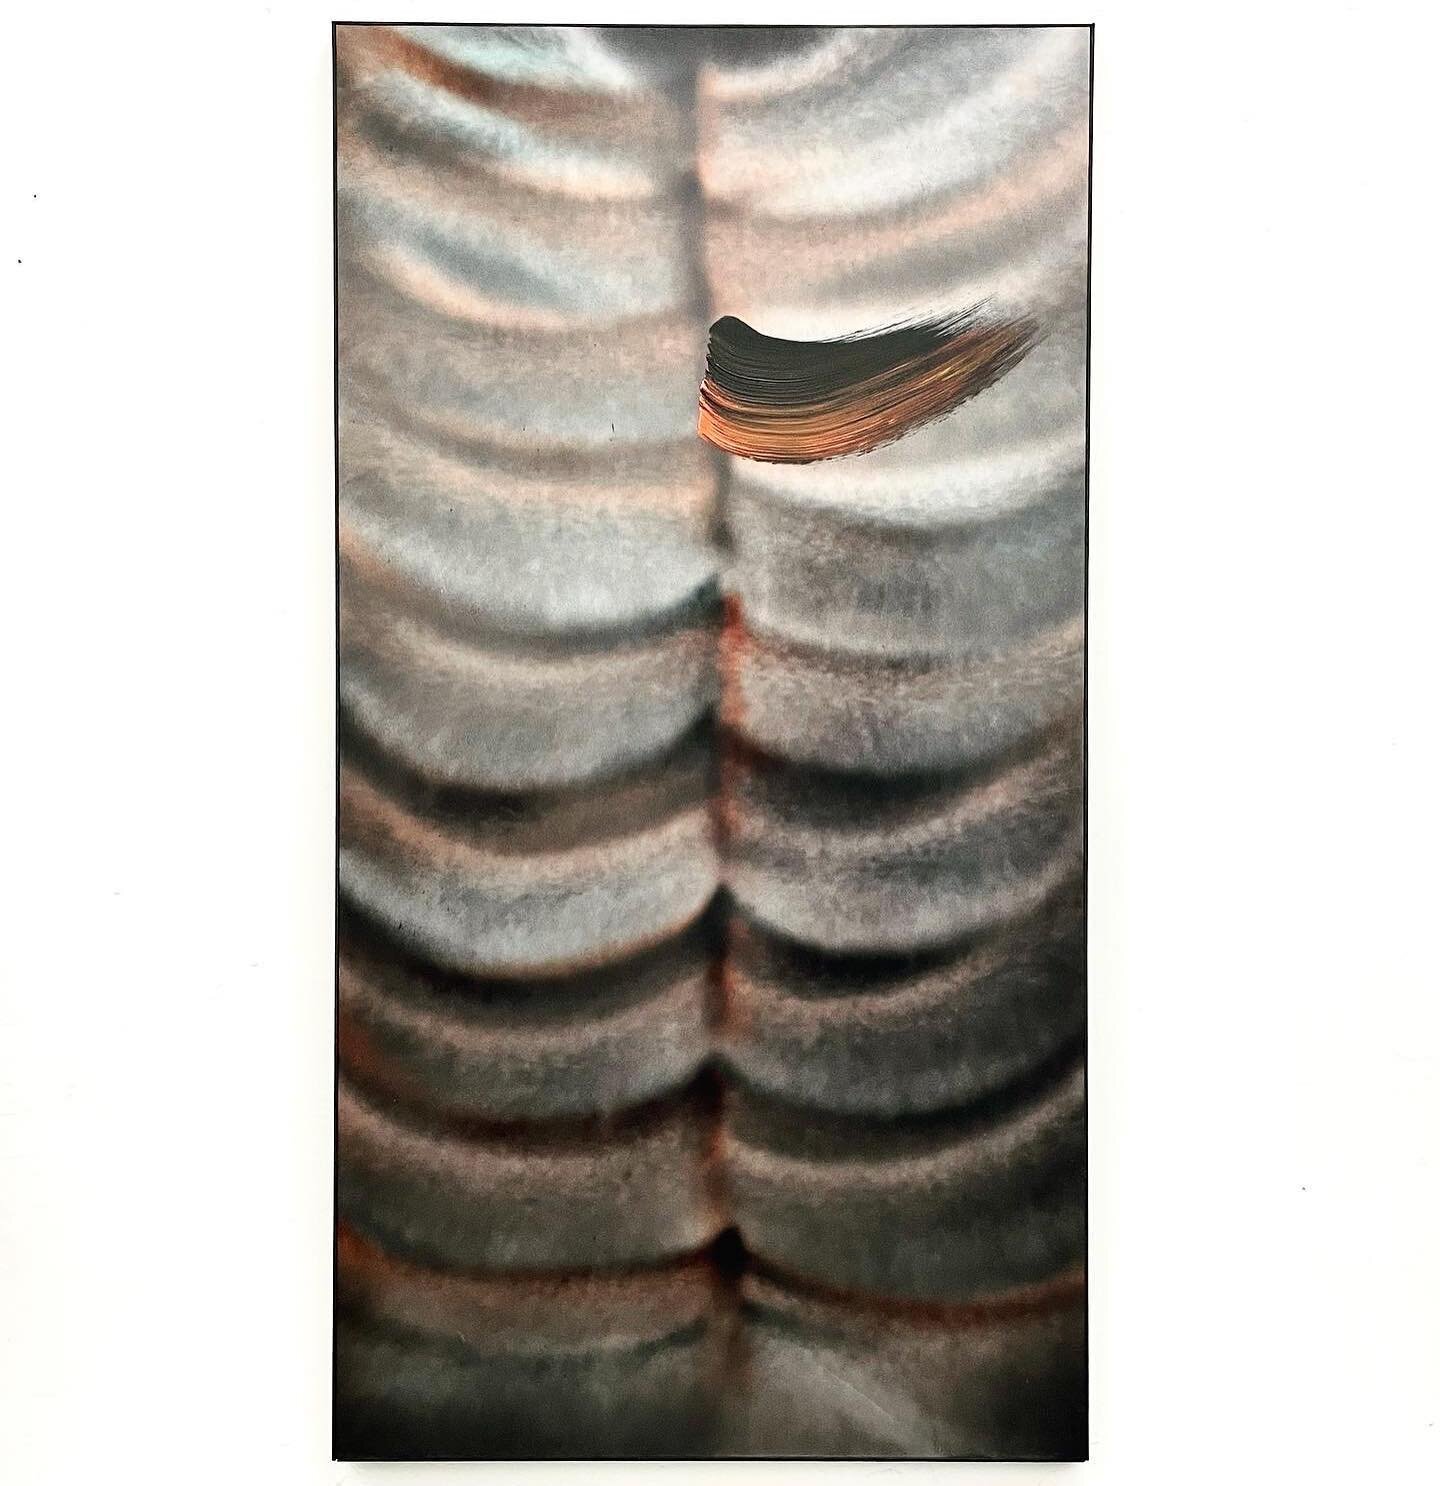 Edouard NG
&ldquo;X-Ray Ember&rdquo;
2022
Metallic automotive paint and acrylic on cell cast acrylic panel

#art #contemporaryart #artist #artlosangeles #carlajayharris #joefyfe #edgararceneaux #vielmettergallery #williambradley #lacma #alexanderkrol